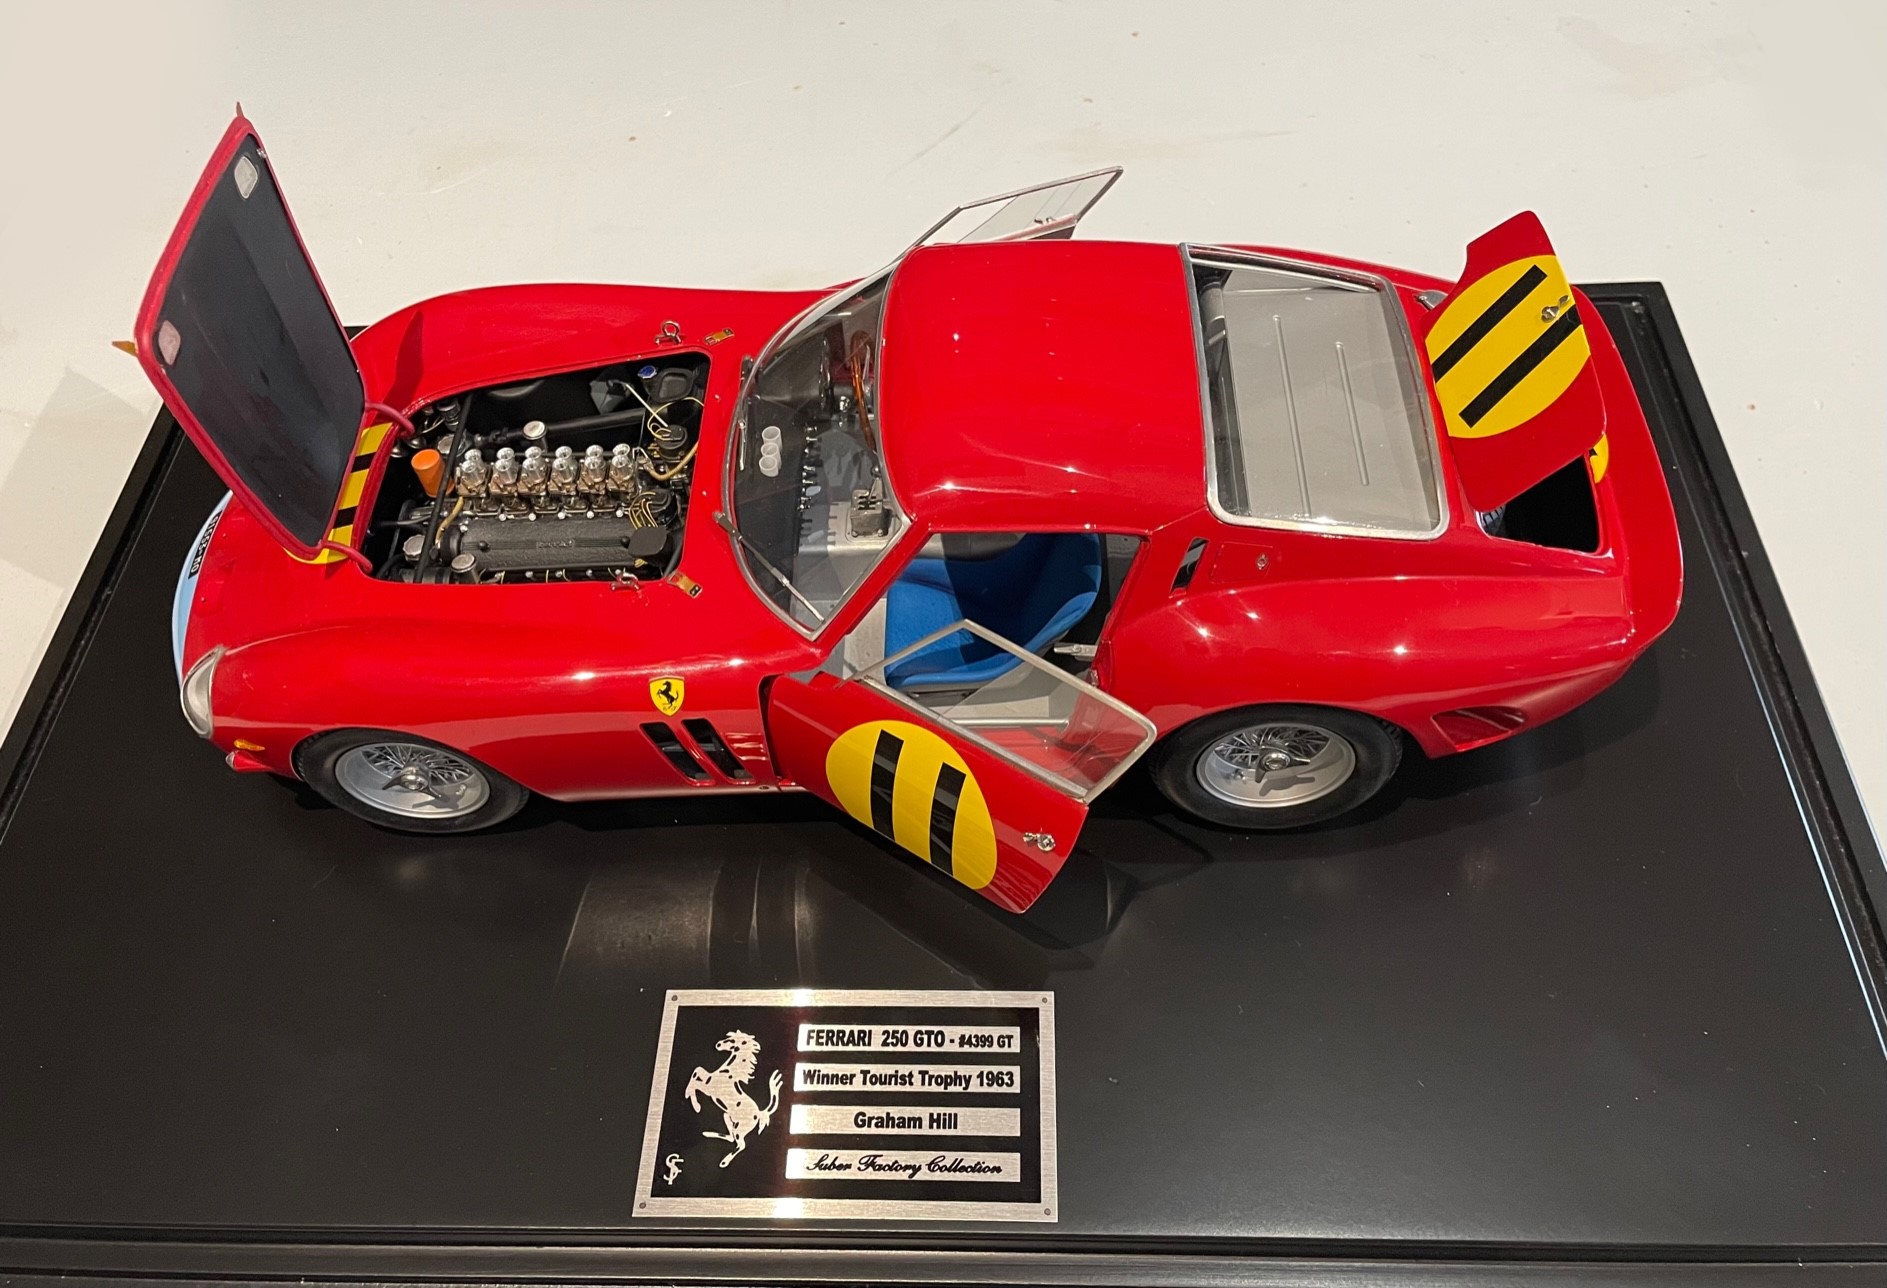 F. Suber : Ferrari 250 GTO Tourist Trophy 1963